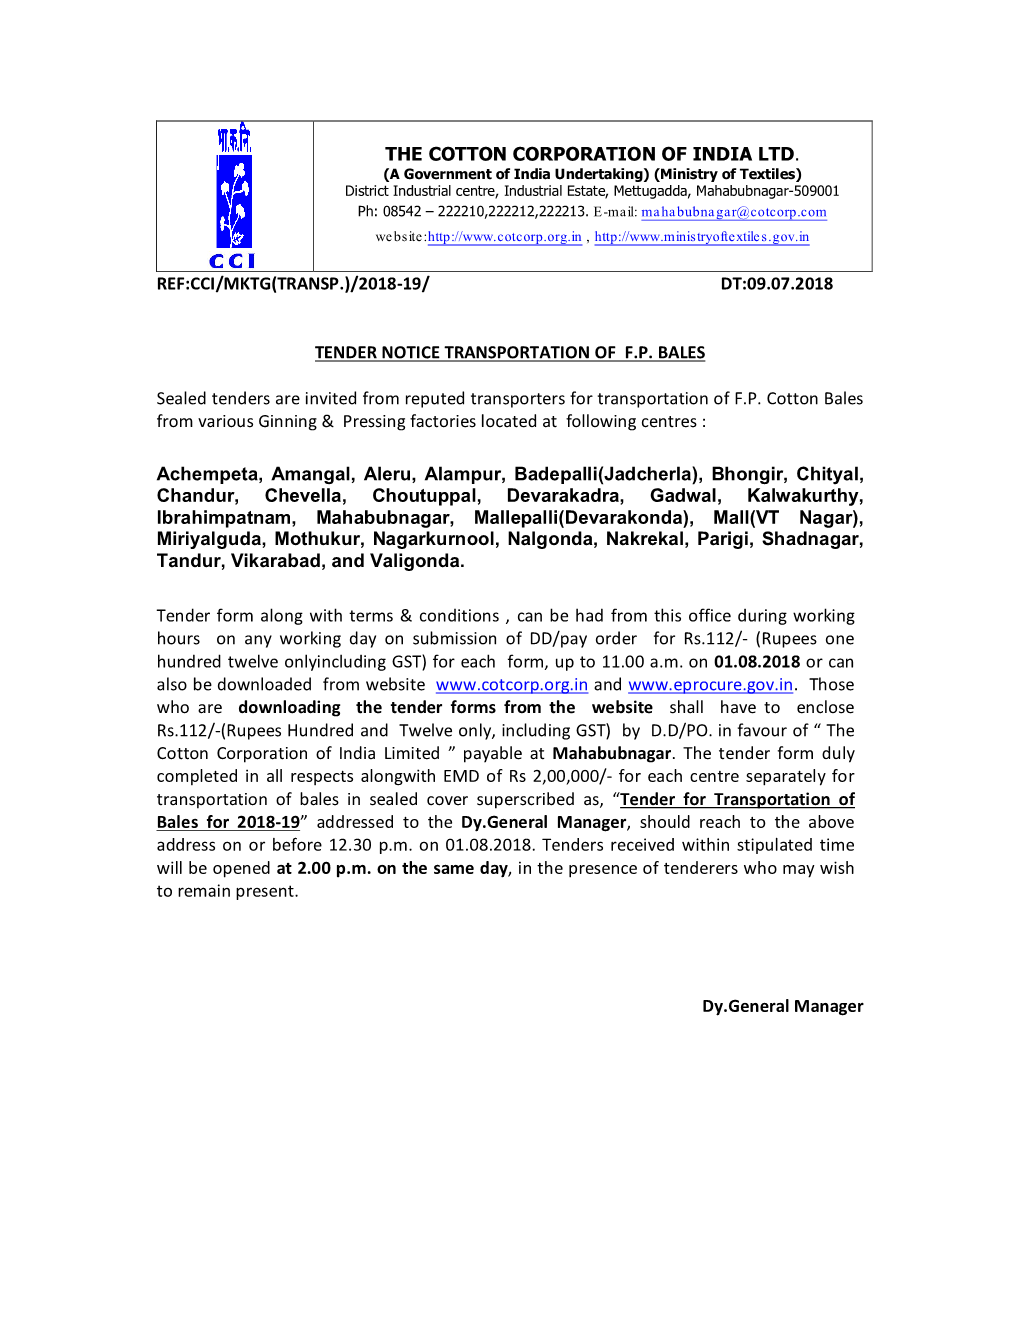 The Cotton Corporation of India Ltd. Ref:Cci/Mktg(Transp.)/2018-19/ Dt:09.07.2018 Tender Notice Transportation of F.P. Bales S